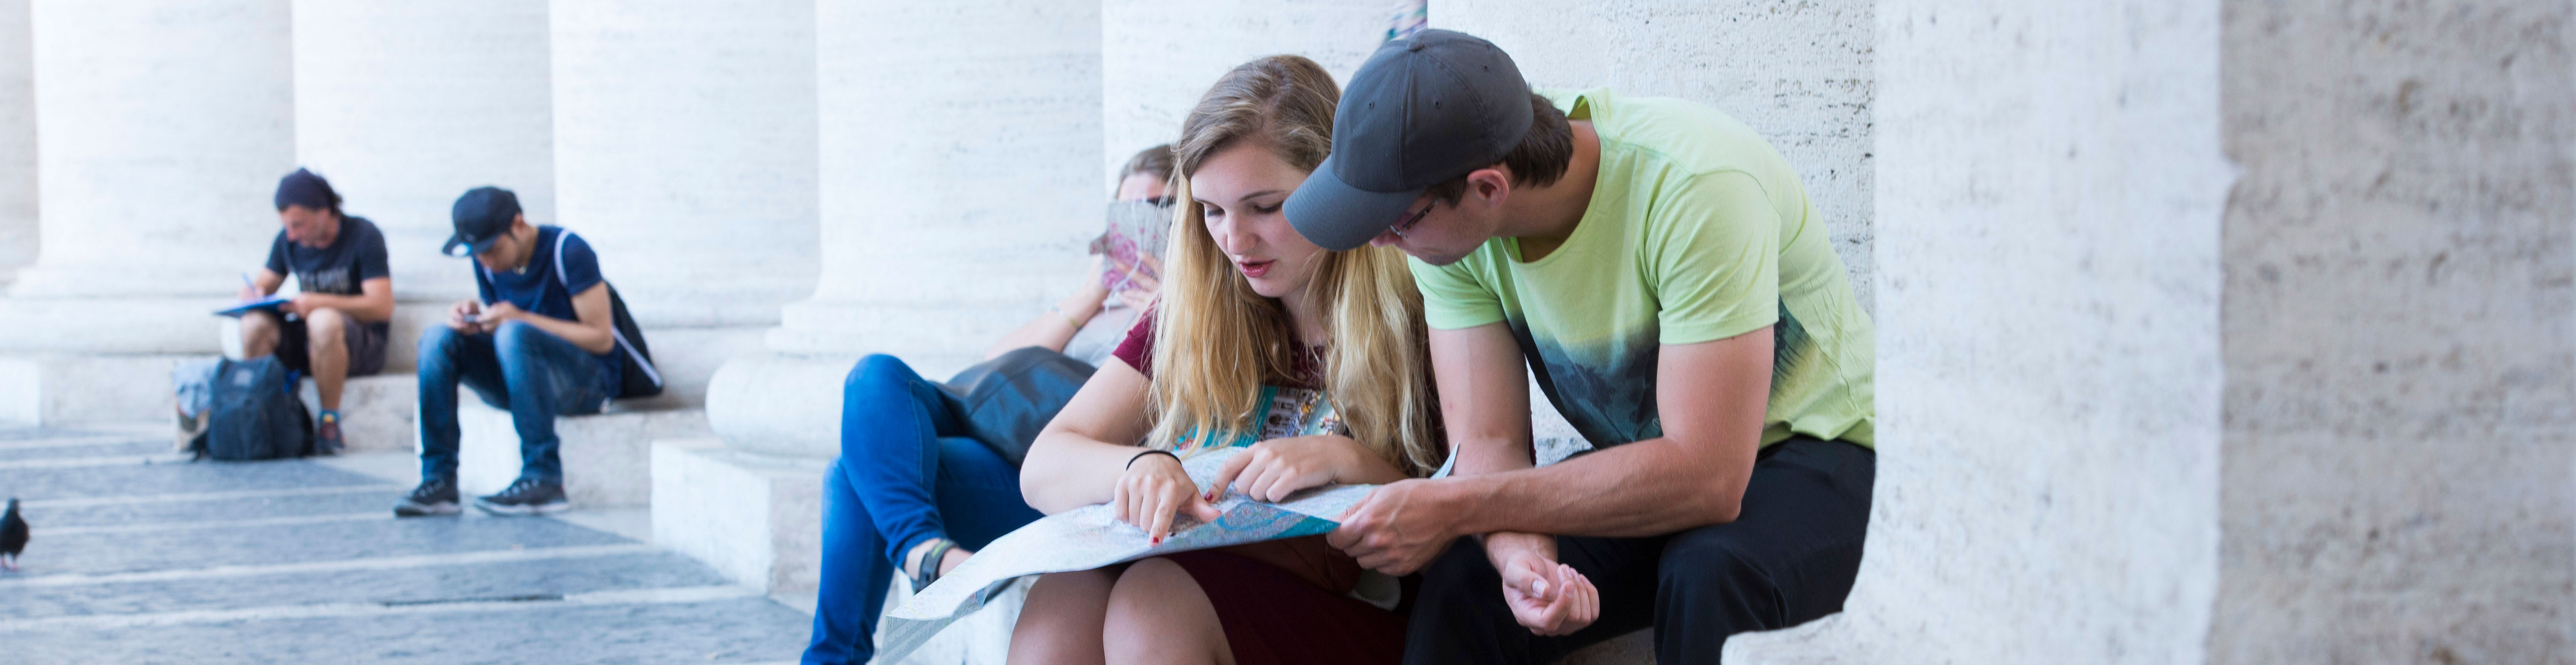 KSU Study Abroad students sitting down looking at a map.